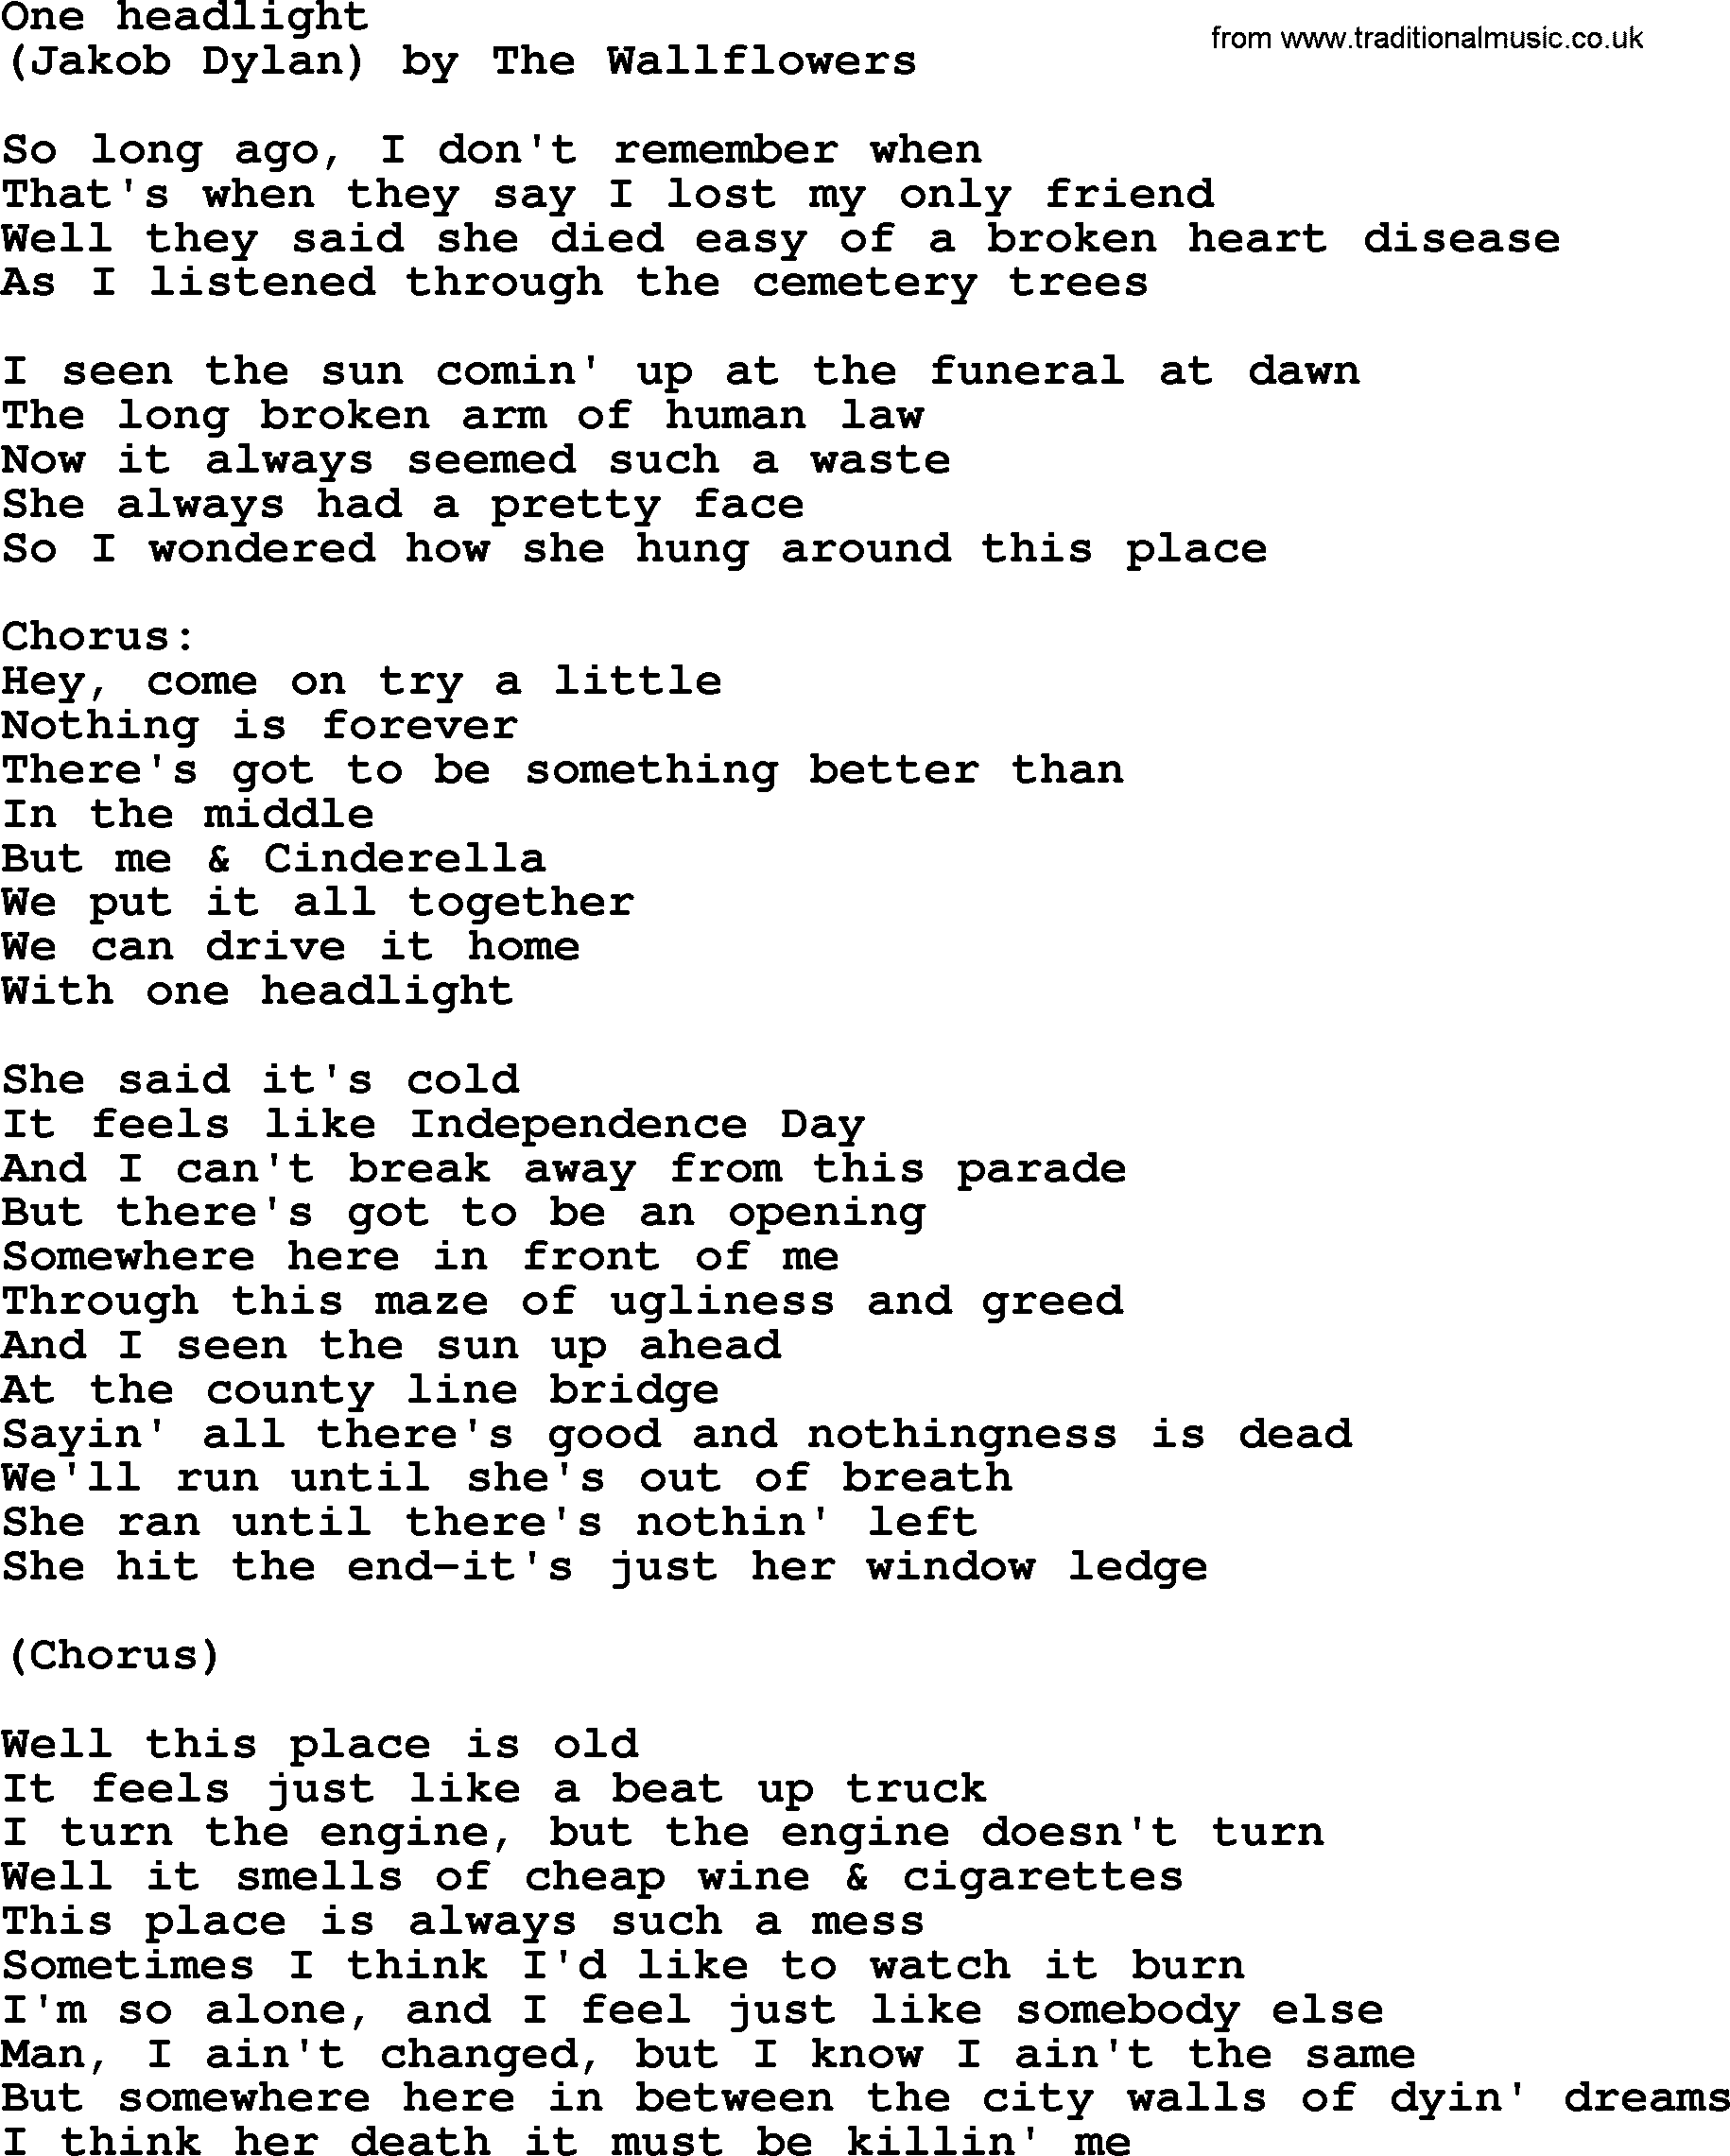 Bruce Springsteen song: One Headlight lyrics